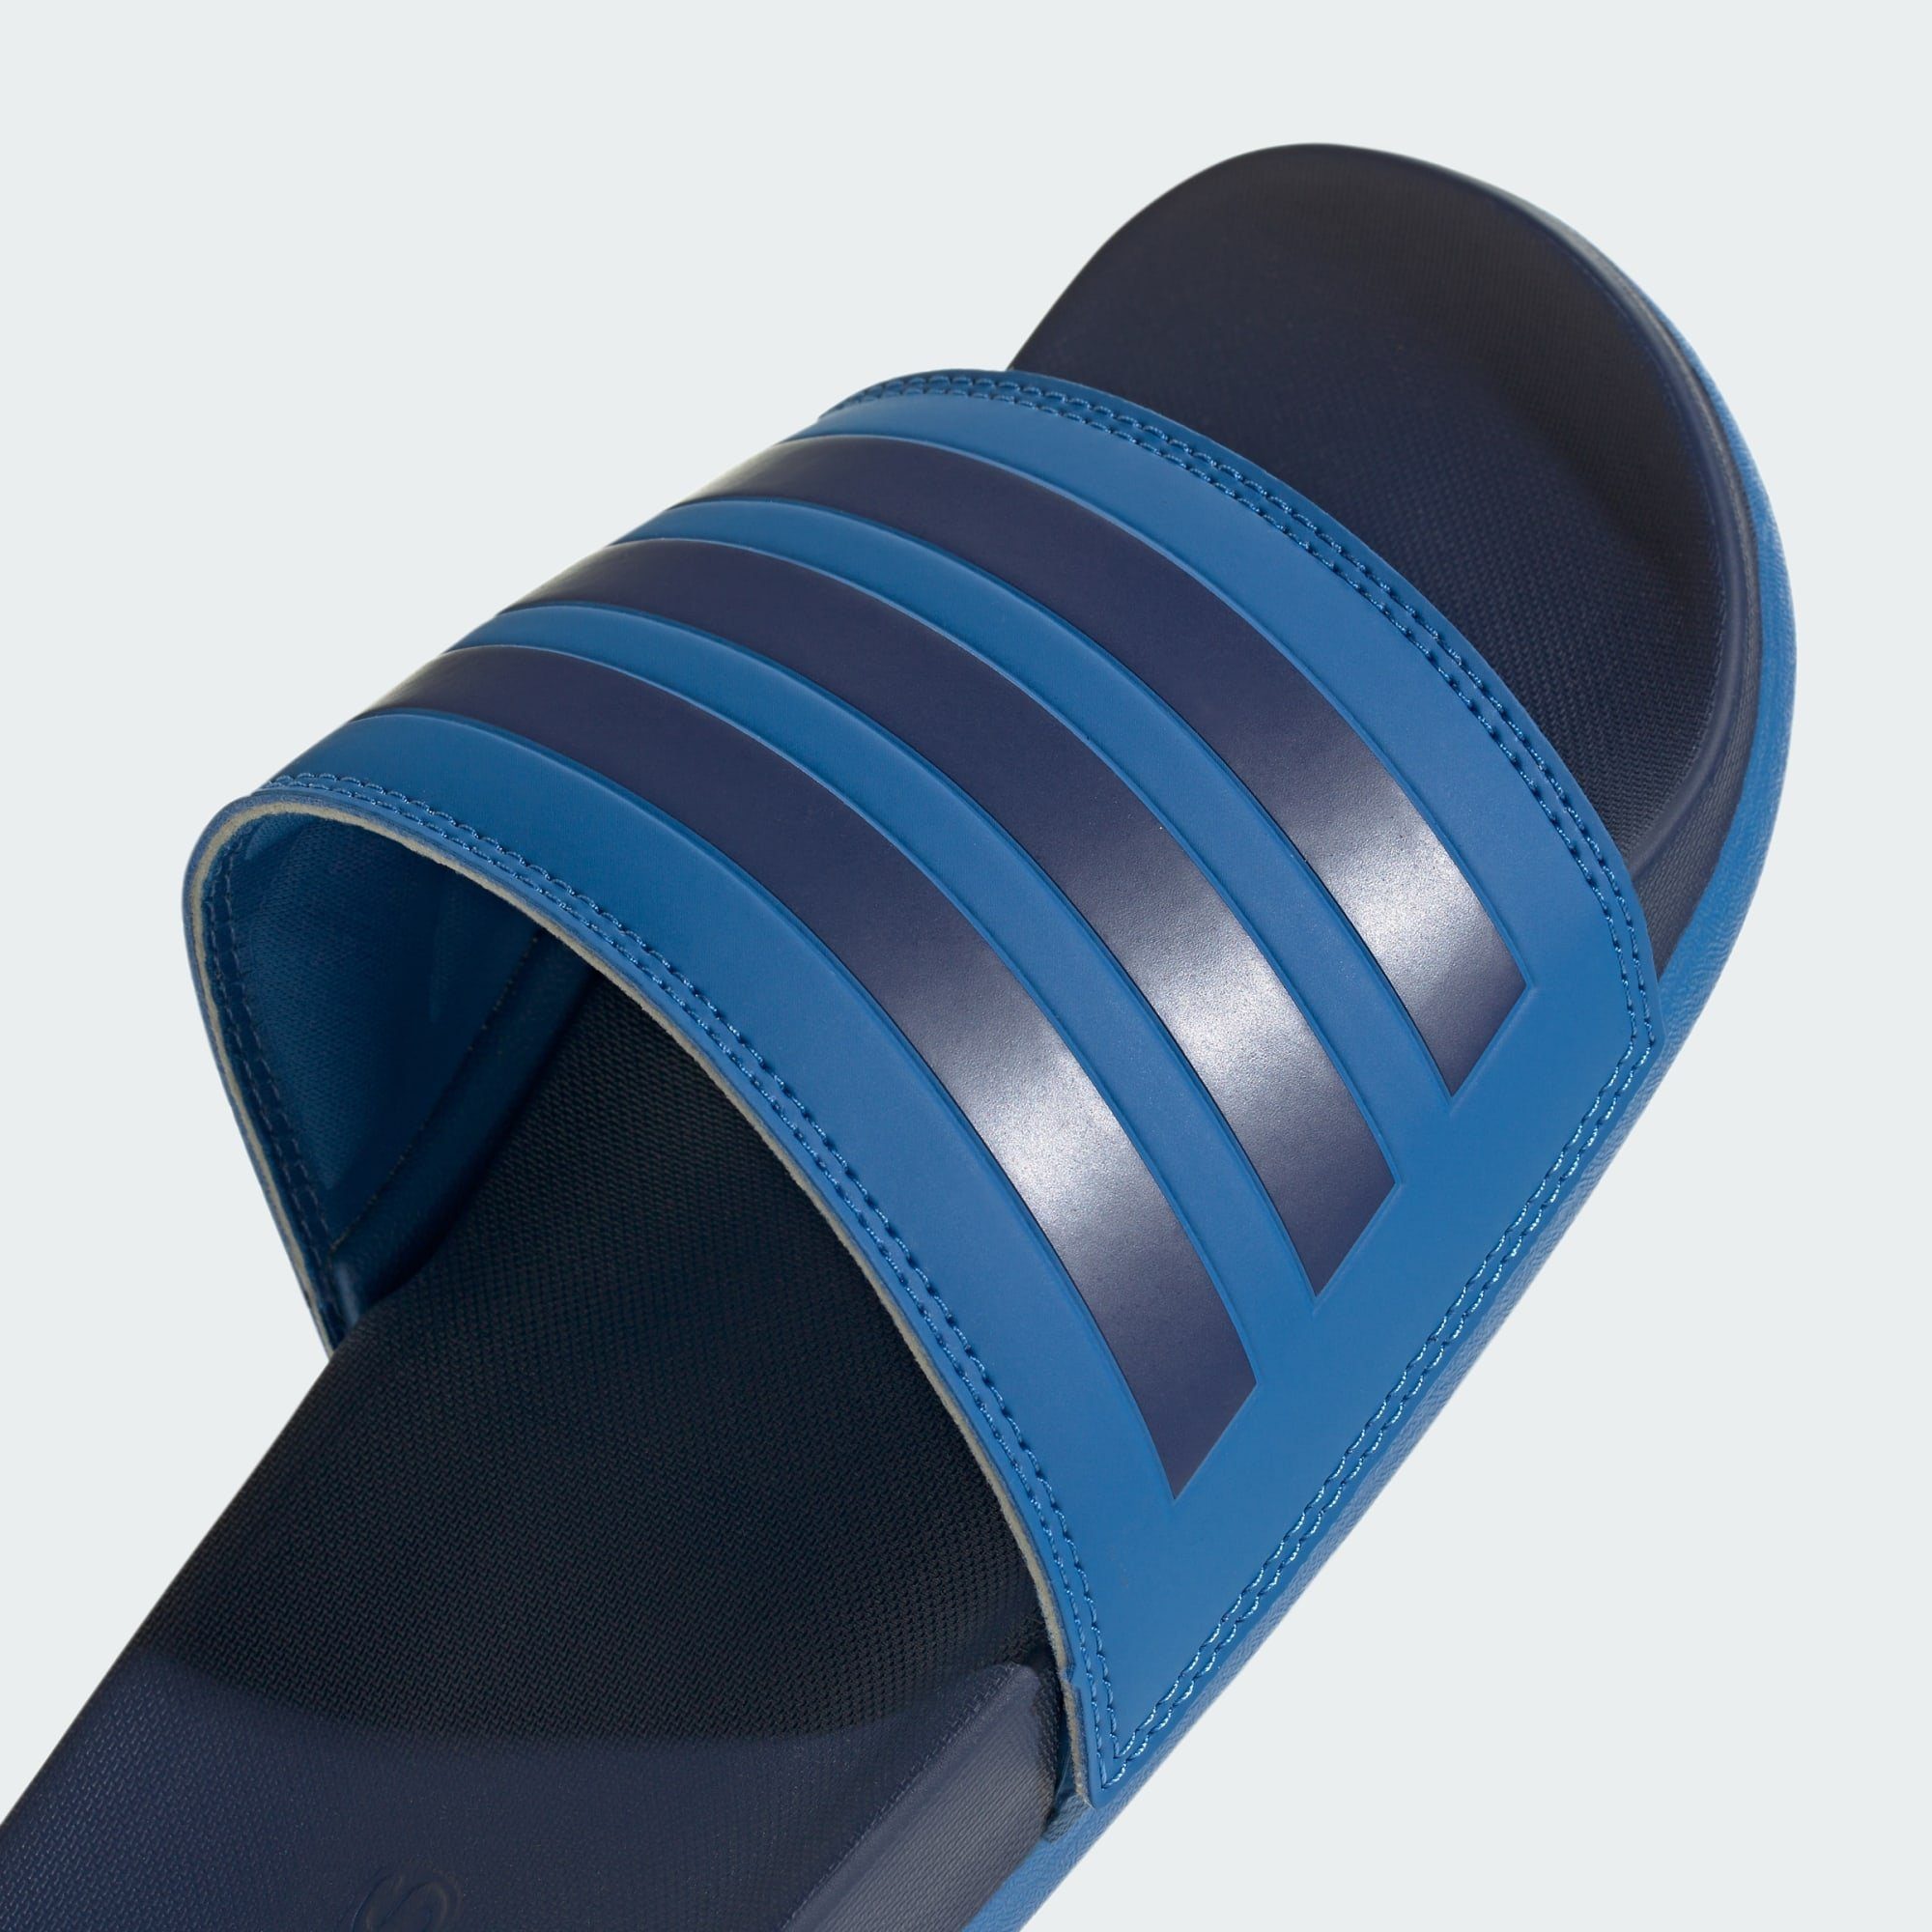 ADILETTE Blue Sportswear Royal Bright adidas / Royal Badesandale / Bright Dark COMFORT